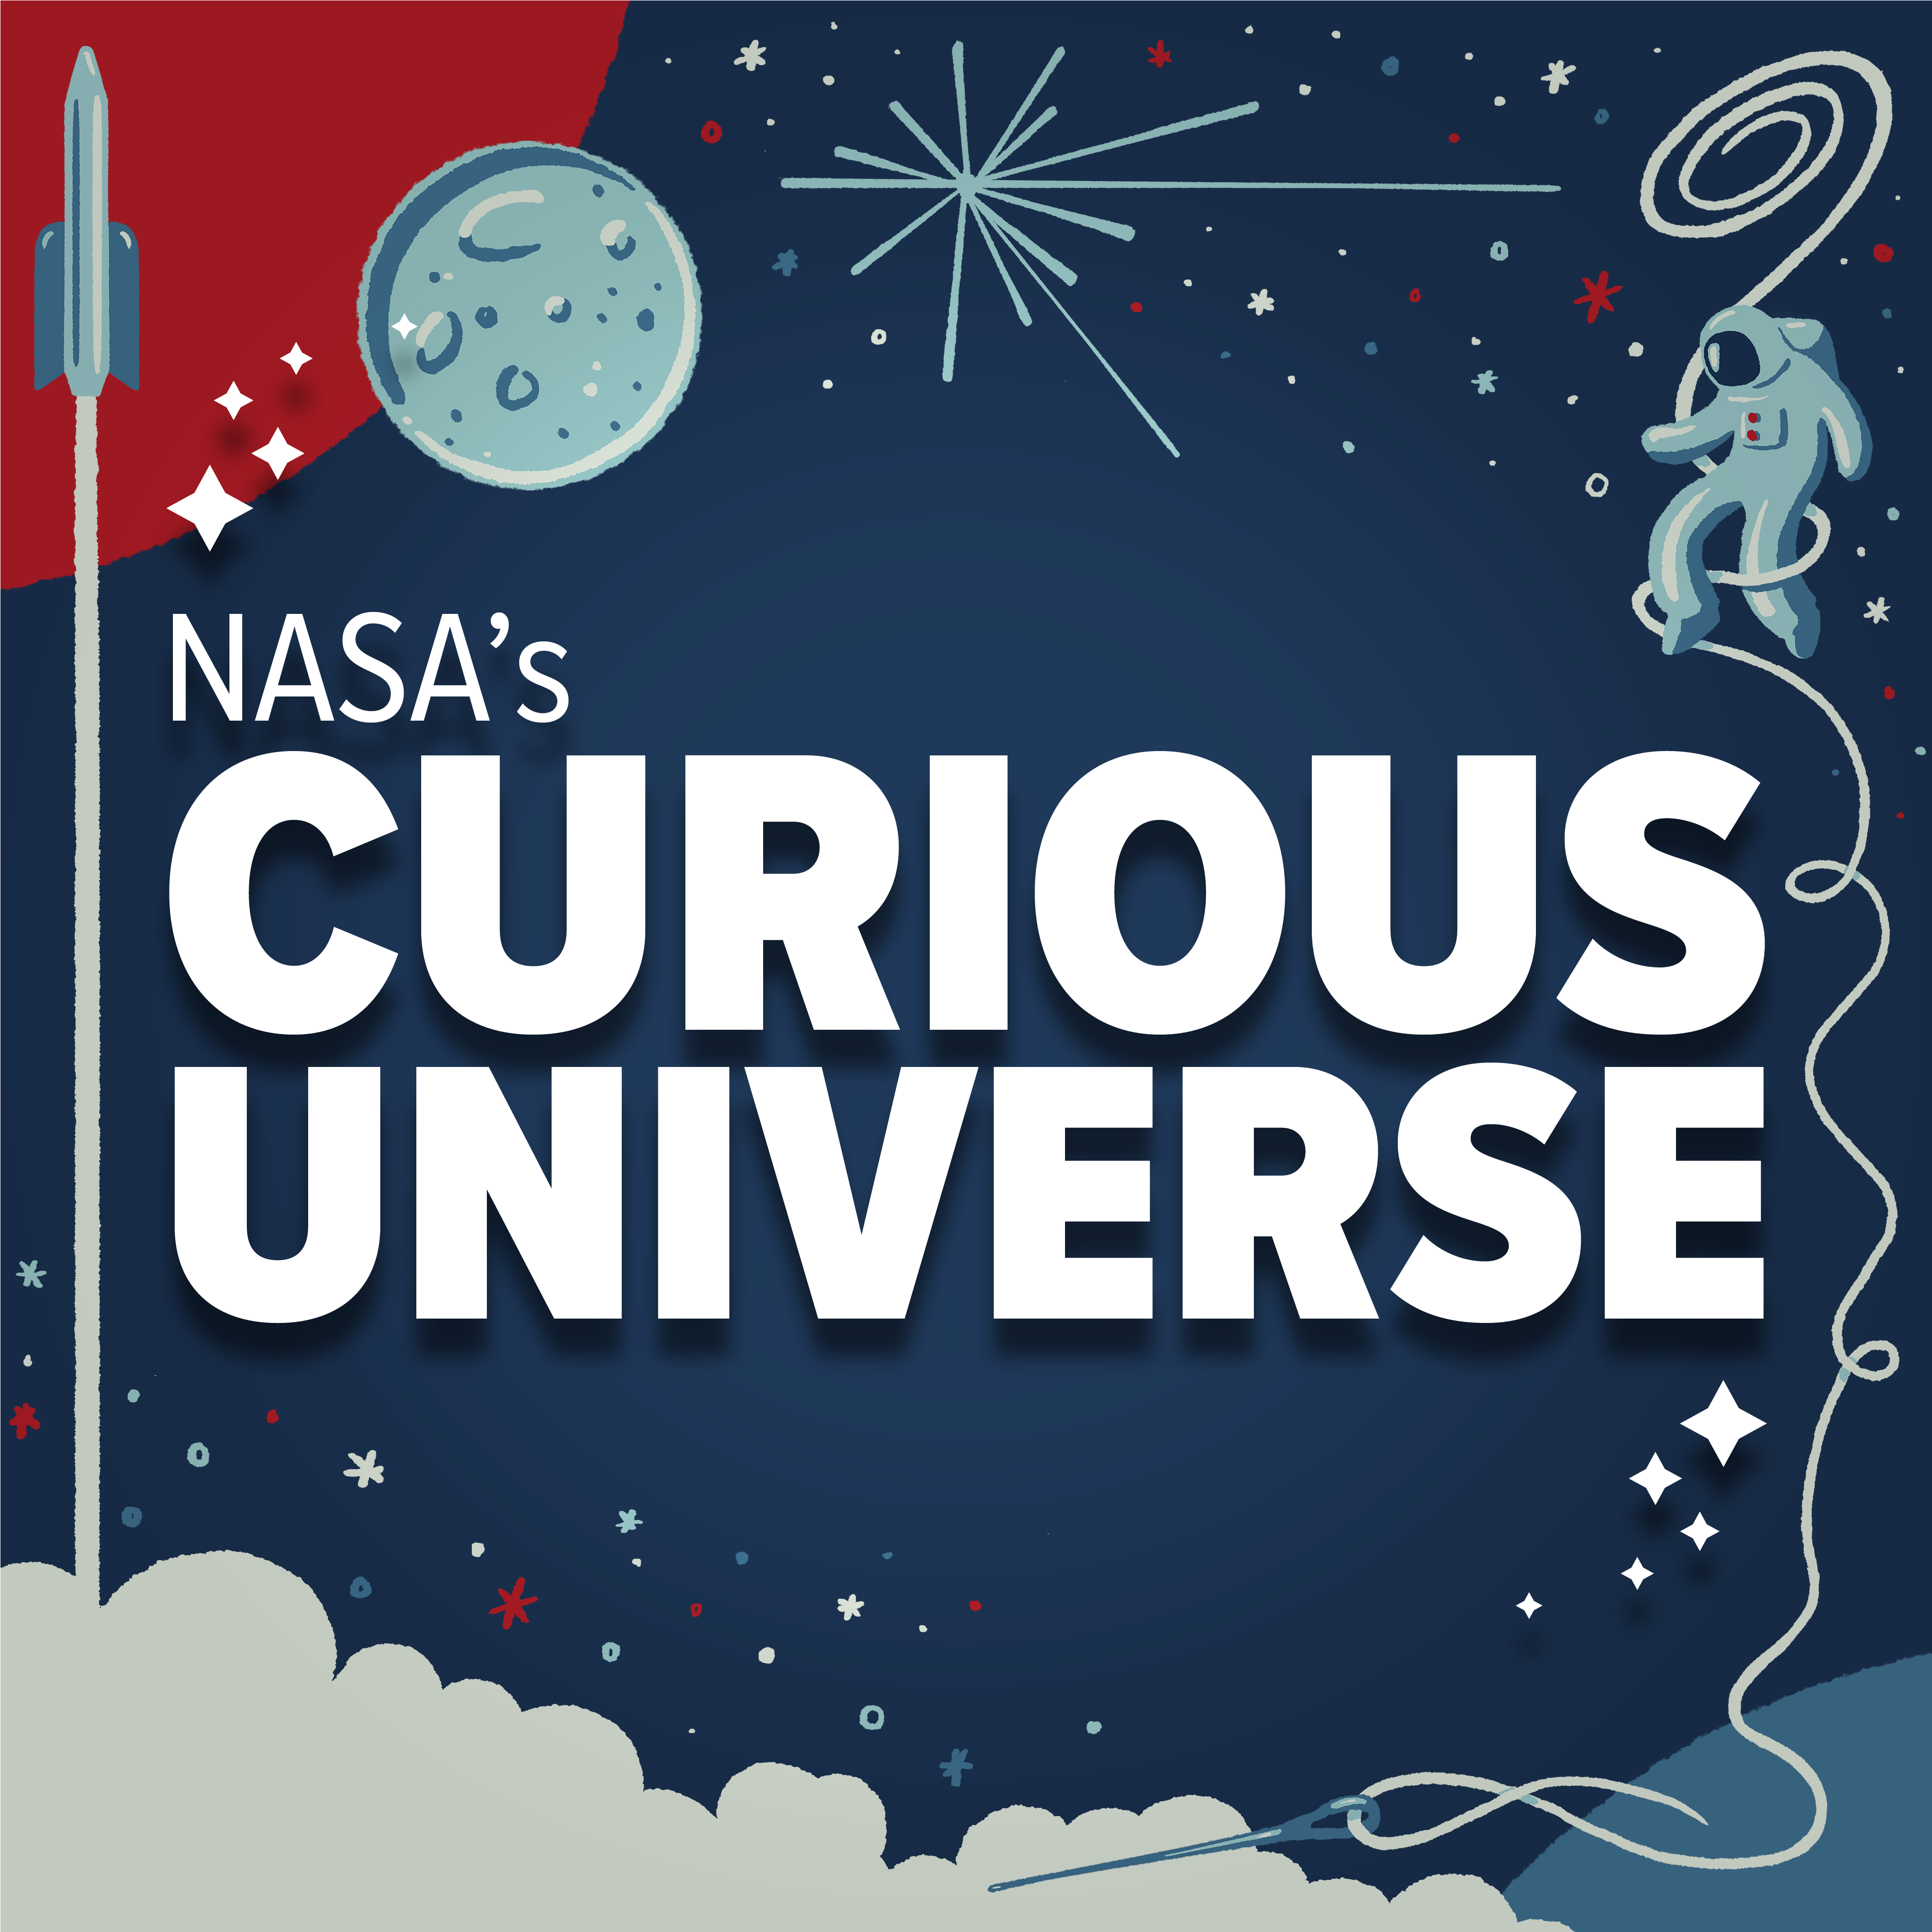 NASA's Curious Universe illustration